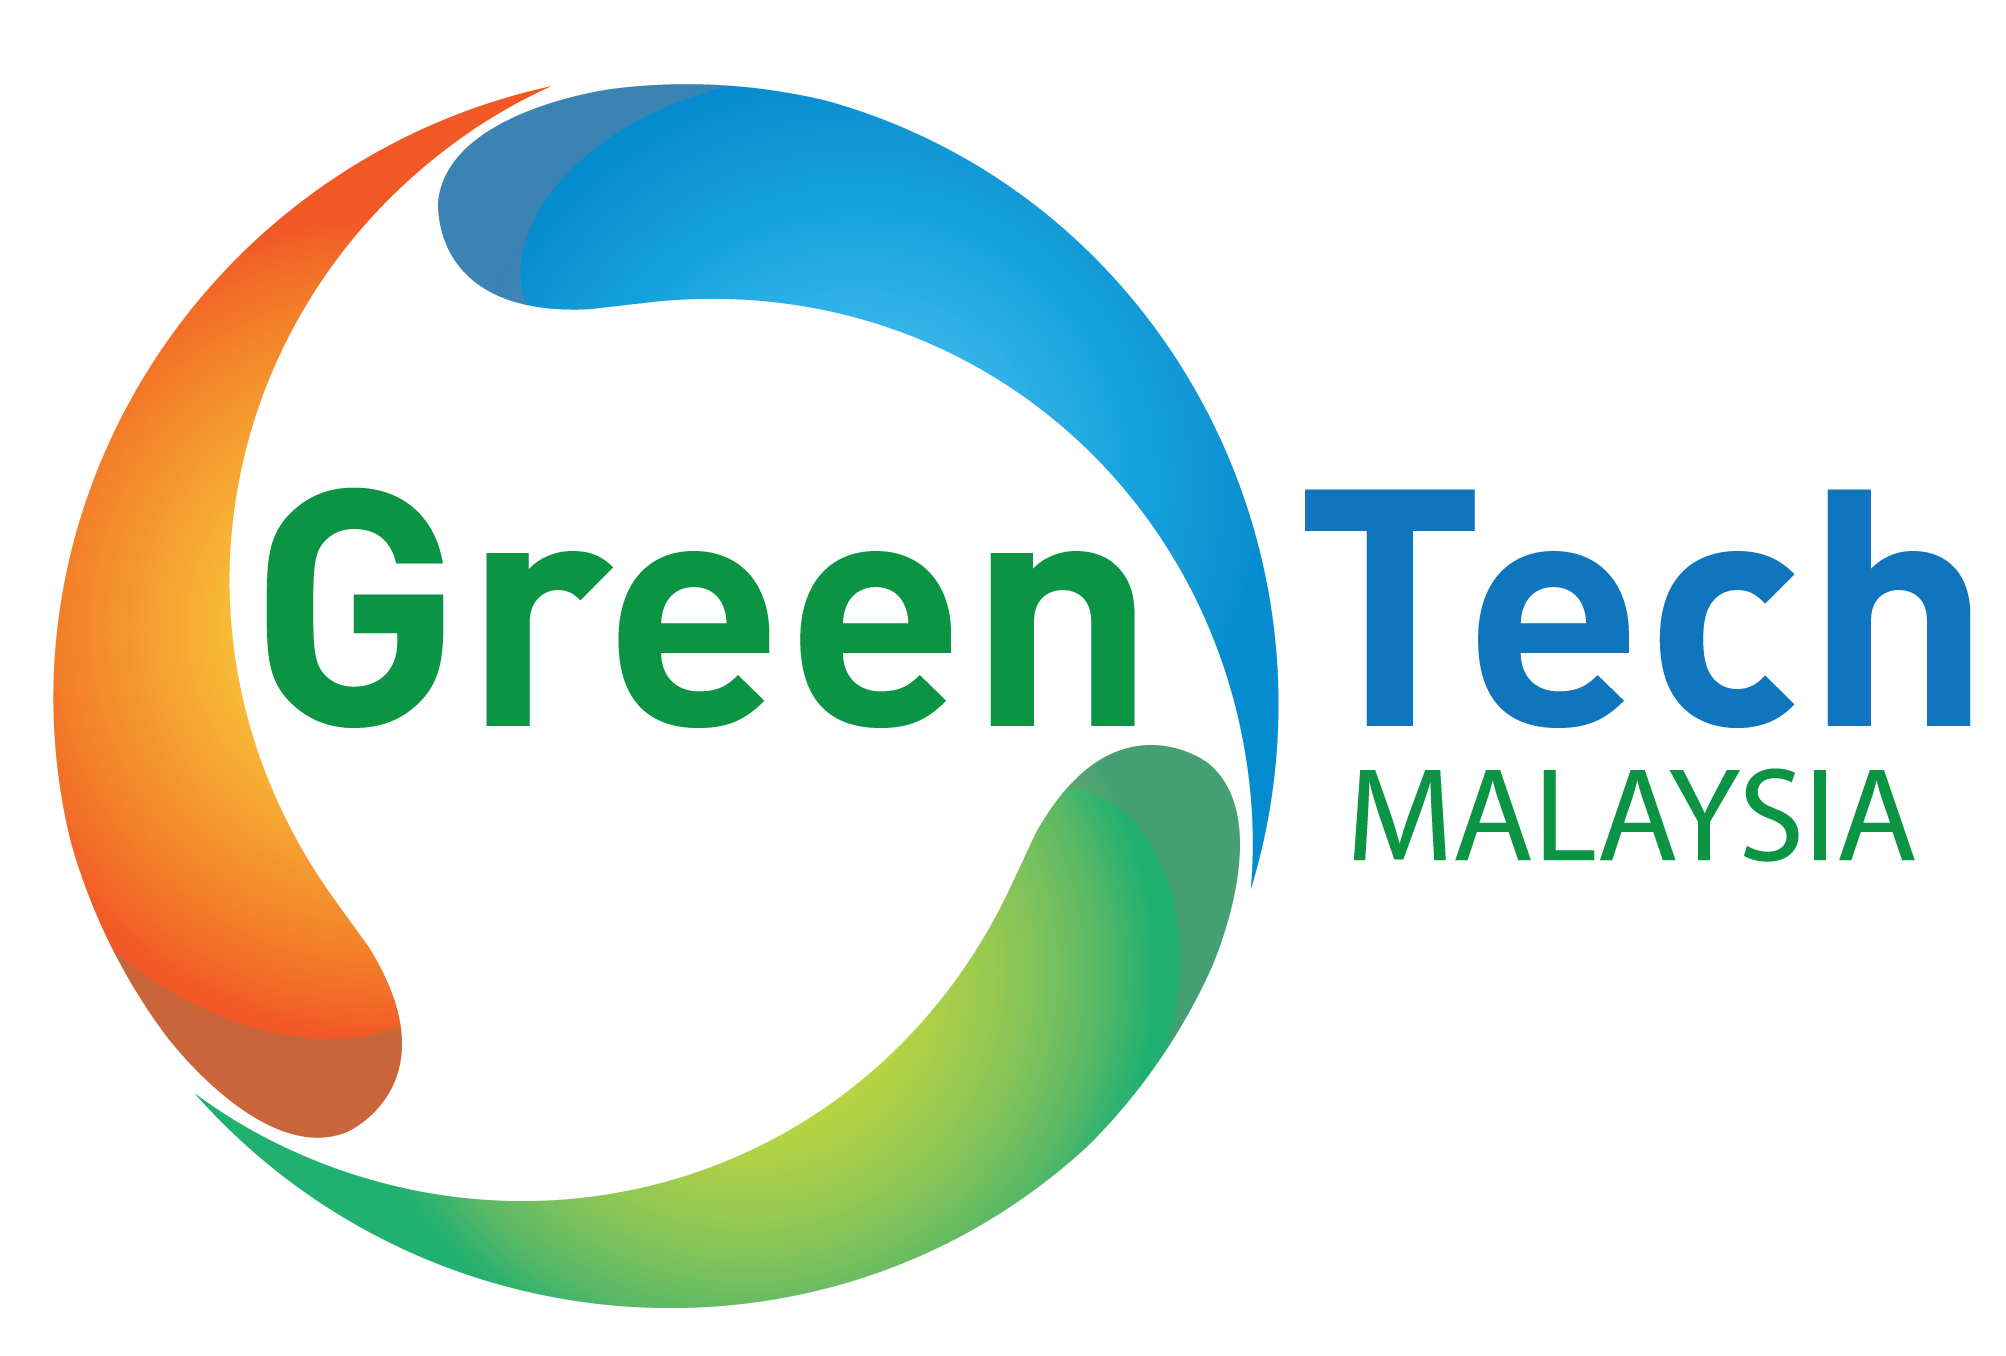 Green Tech Malaysia